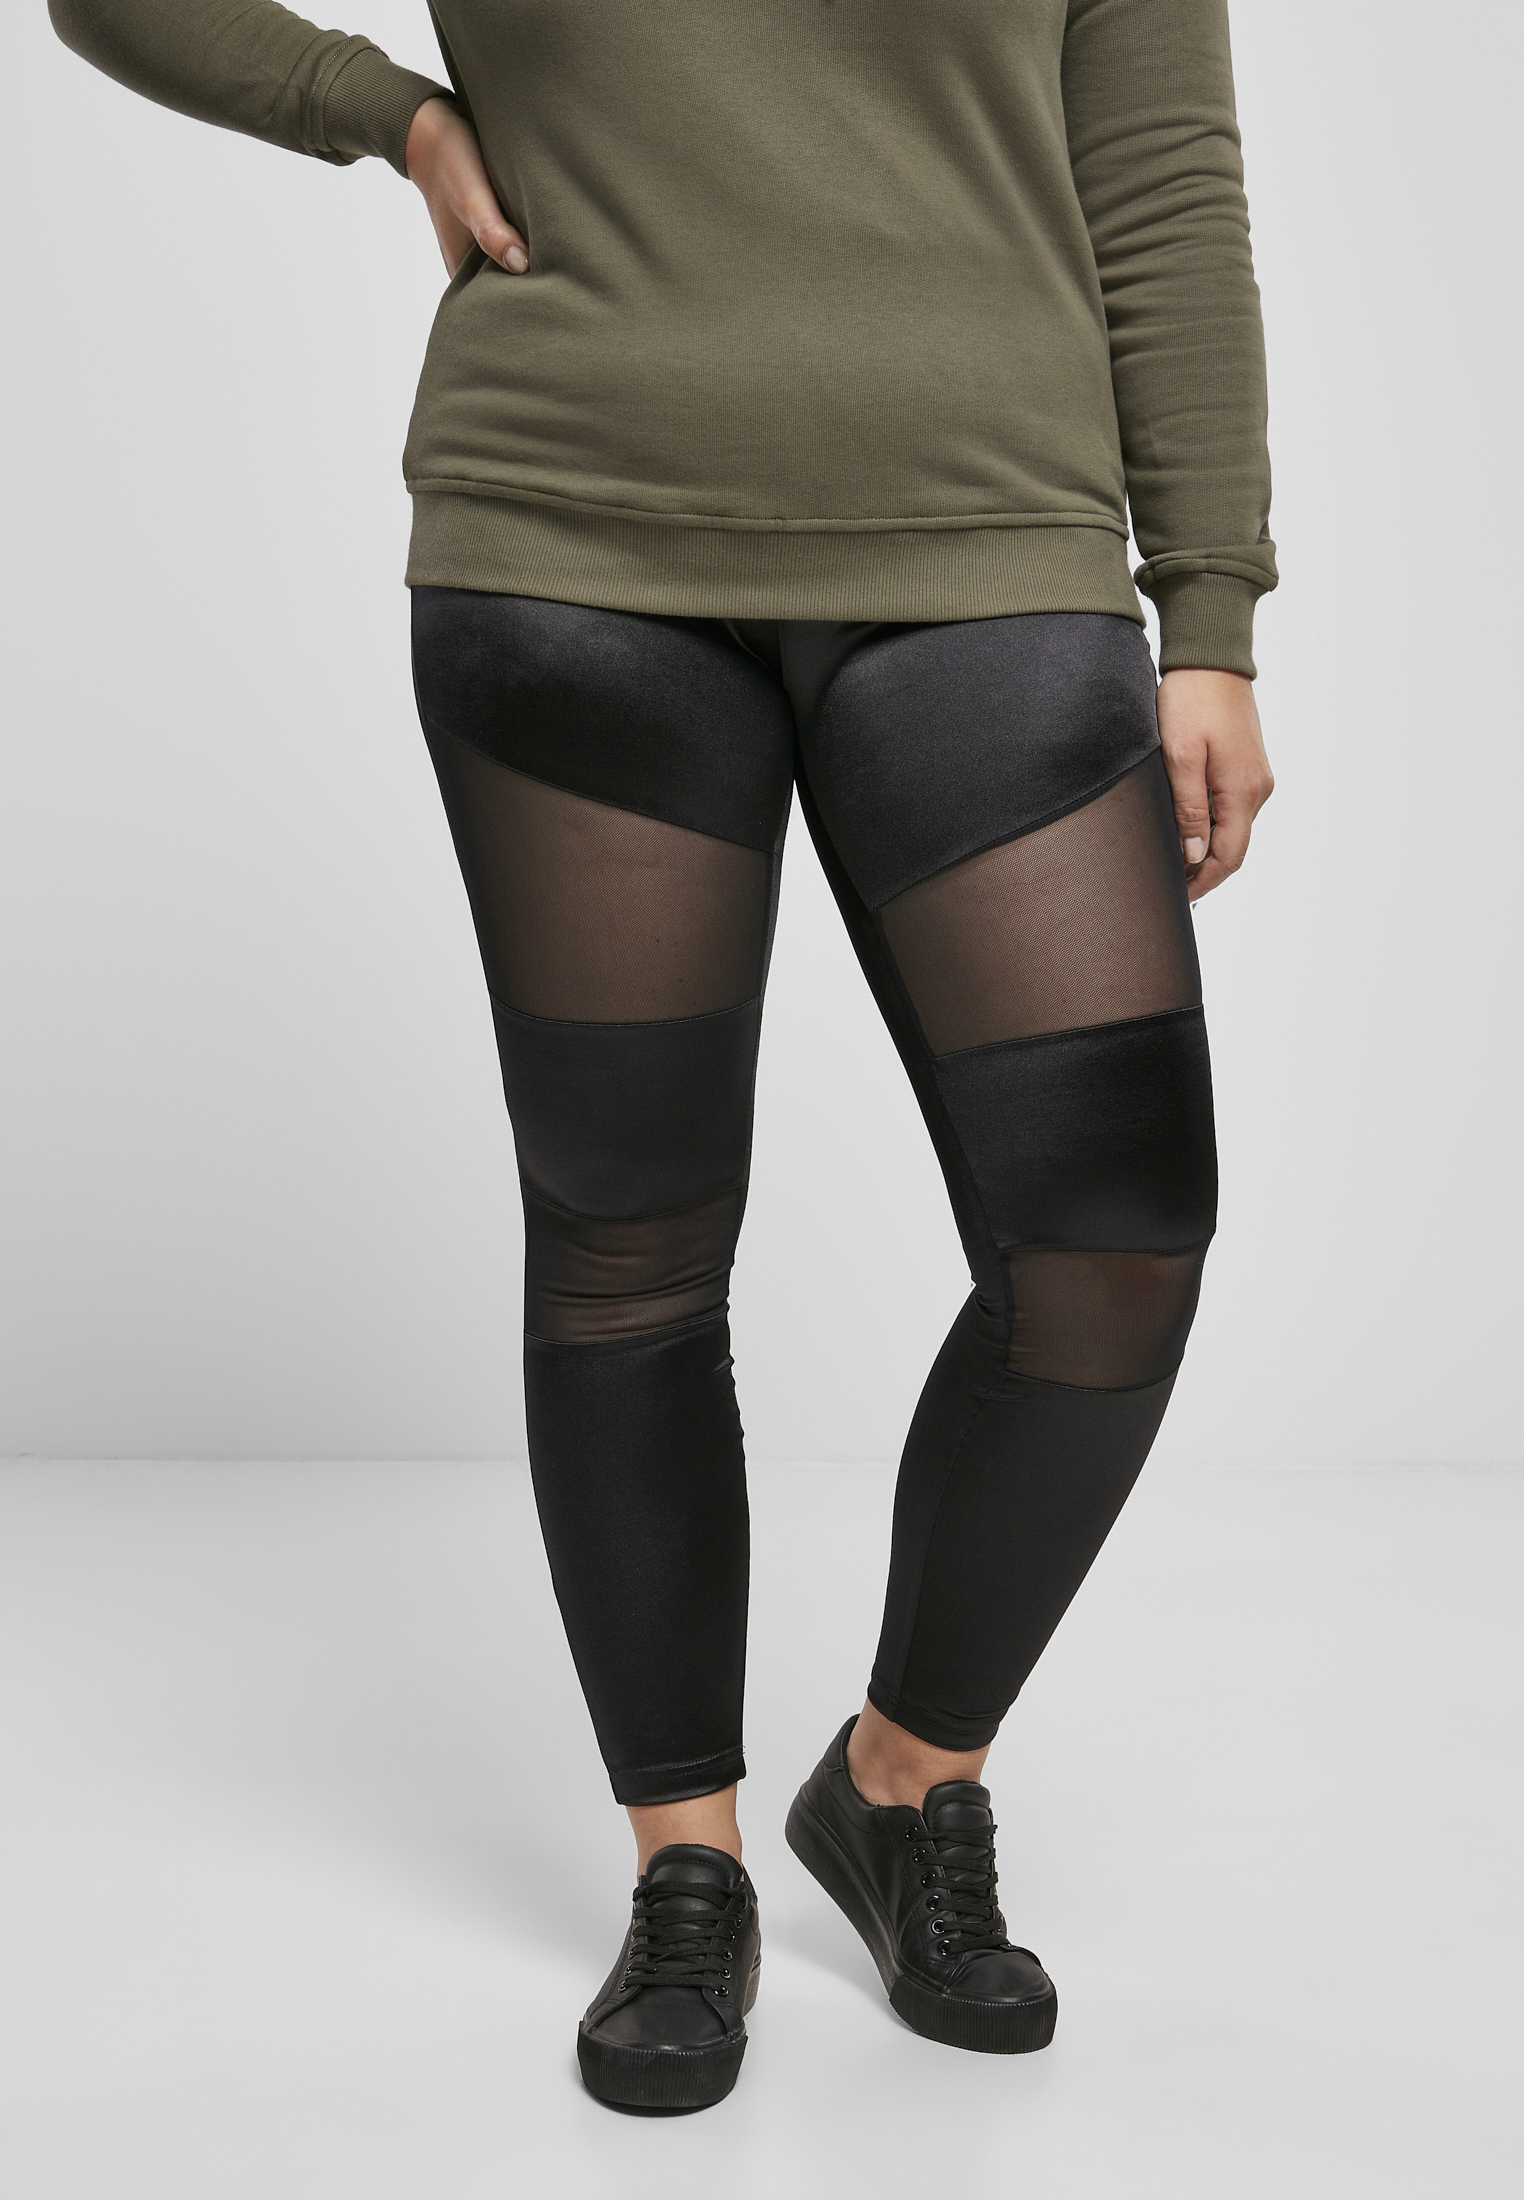 Women's pants (leggings) URBAN CLASSICS - Tech Mesh Faux Leather Leggings -  black - TB4004 